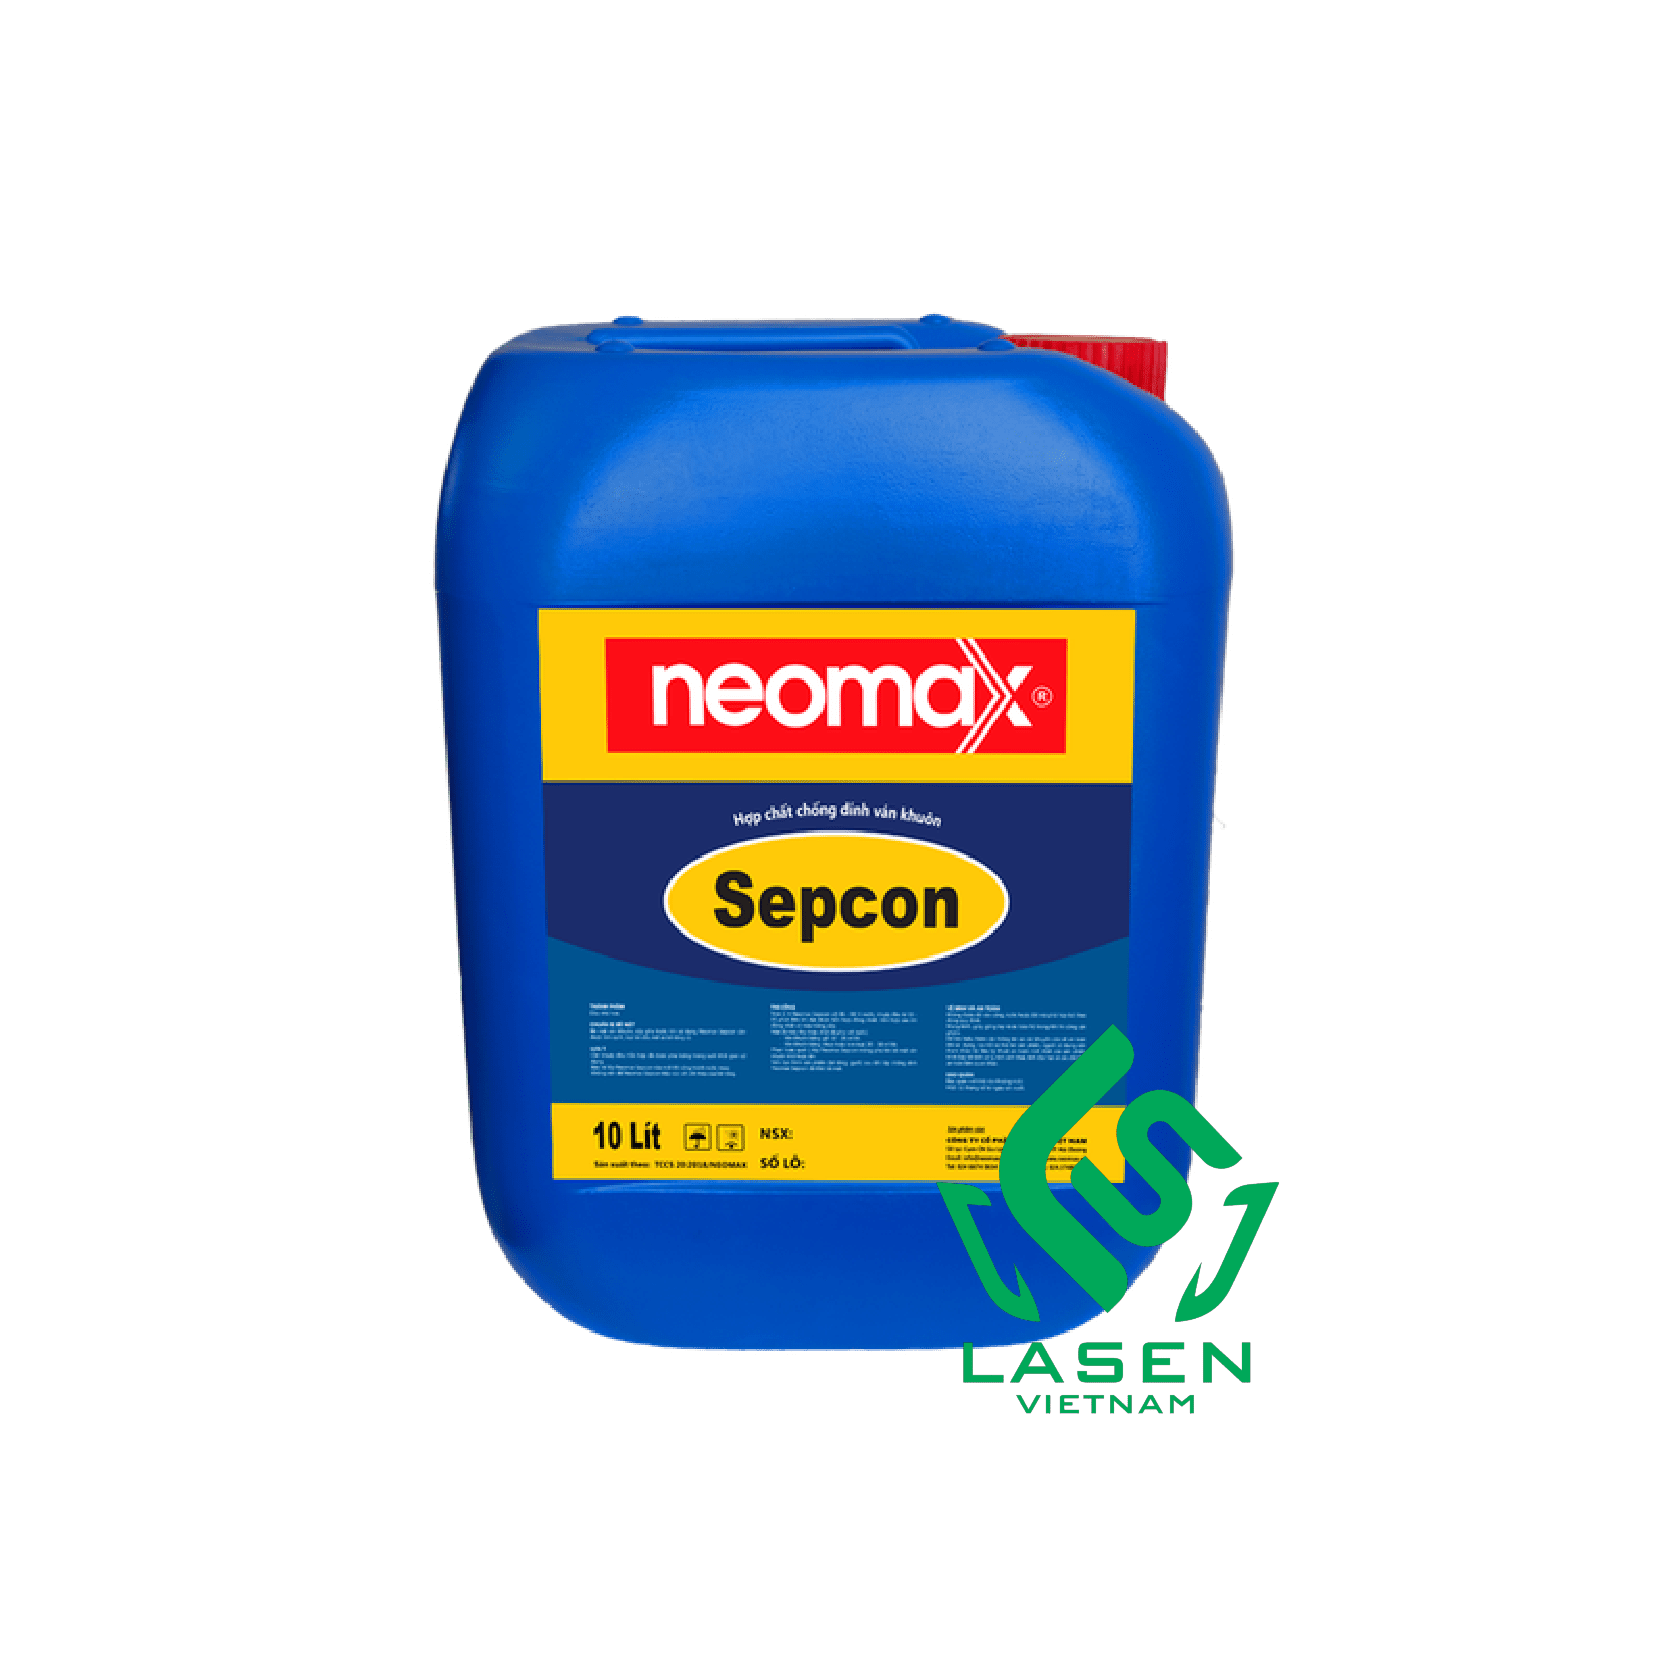 Tổng quan về Neomax Sepcon